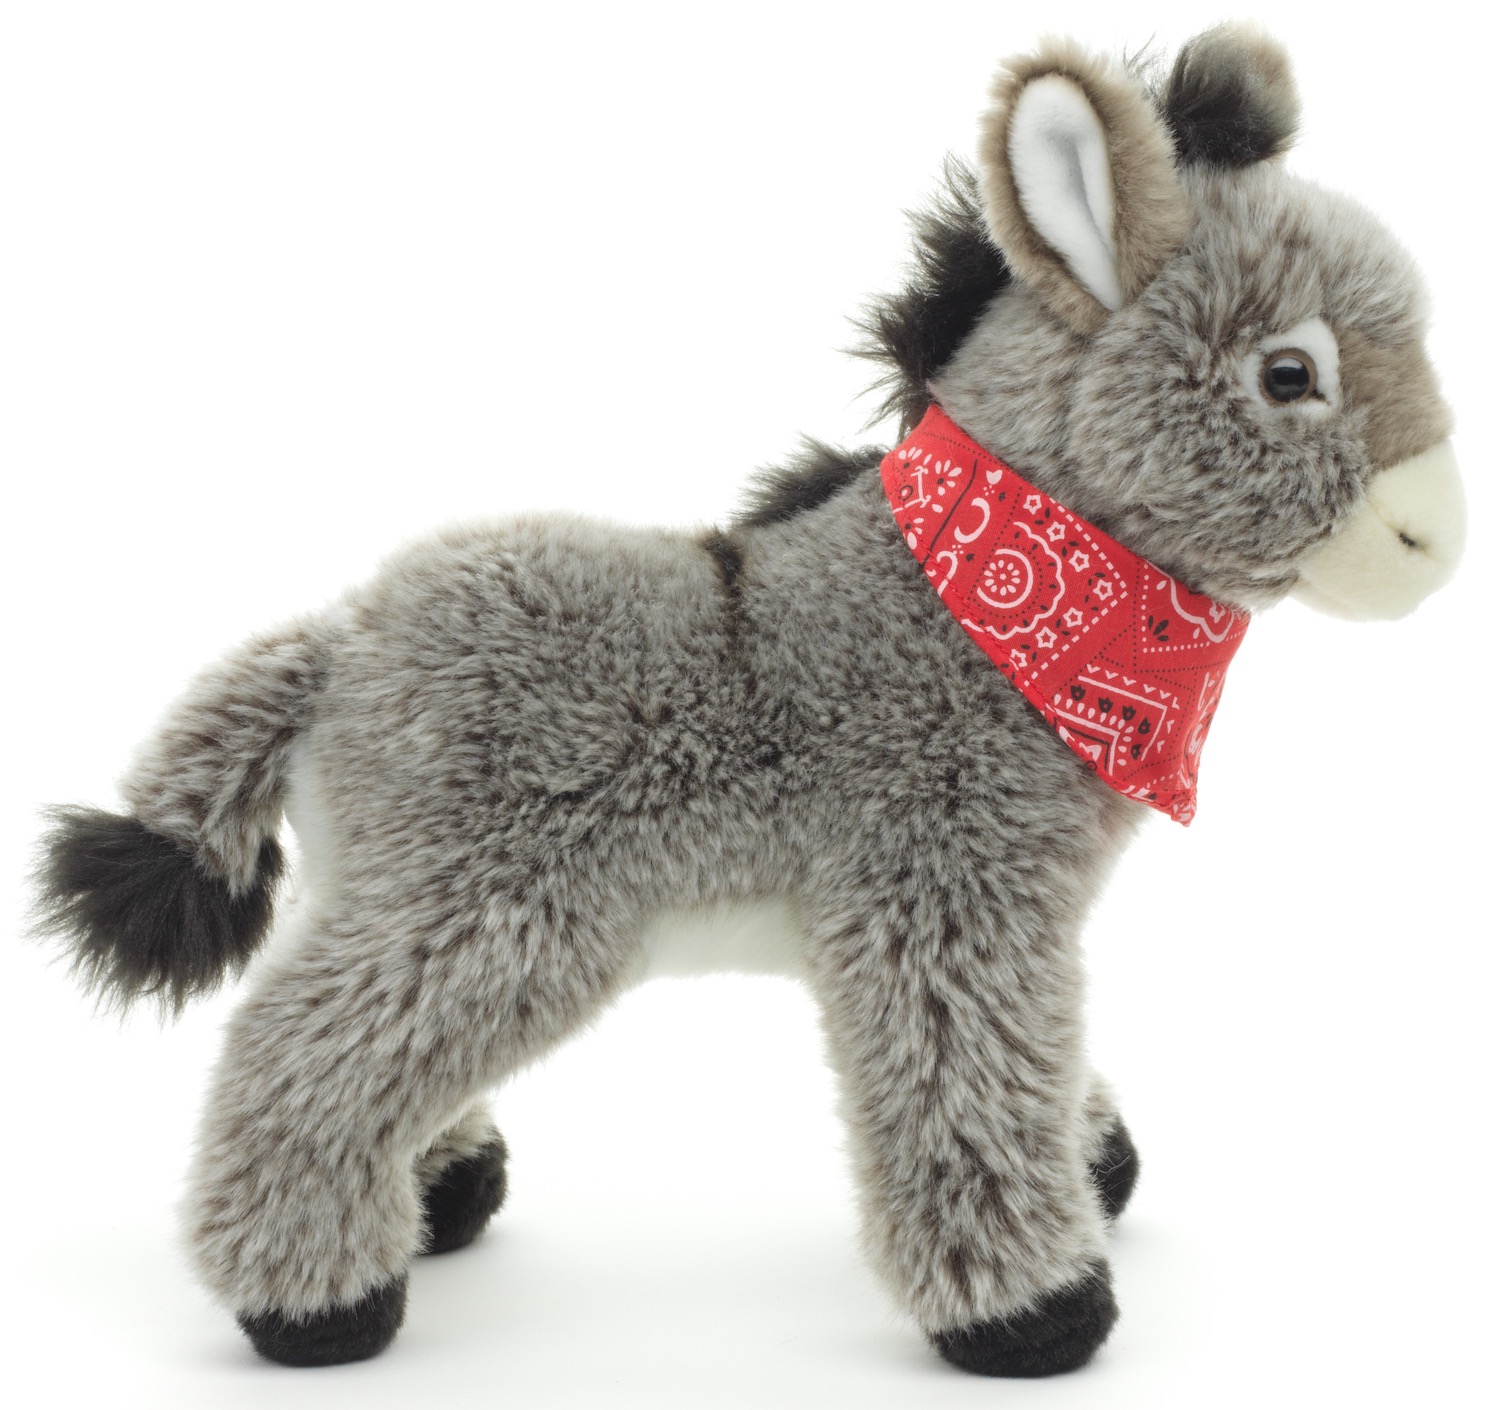 Uni-Toys - Donkey With Bandana, Standing - 30 cm (height) - Plush Donkey - Soft Toy, Cuddly Toy